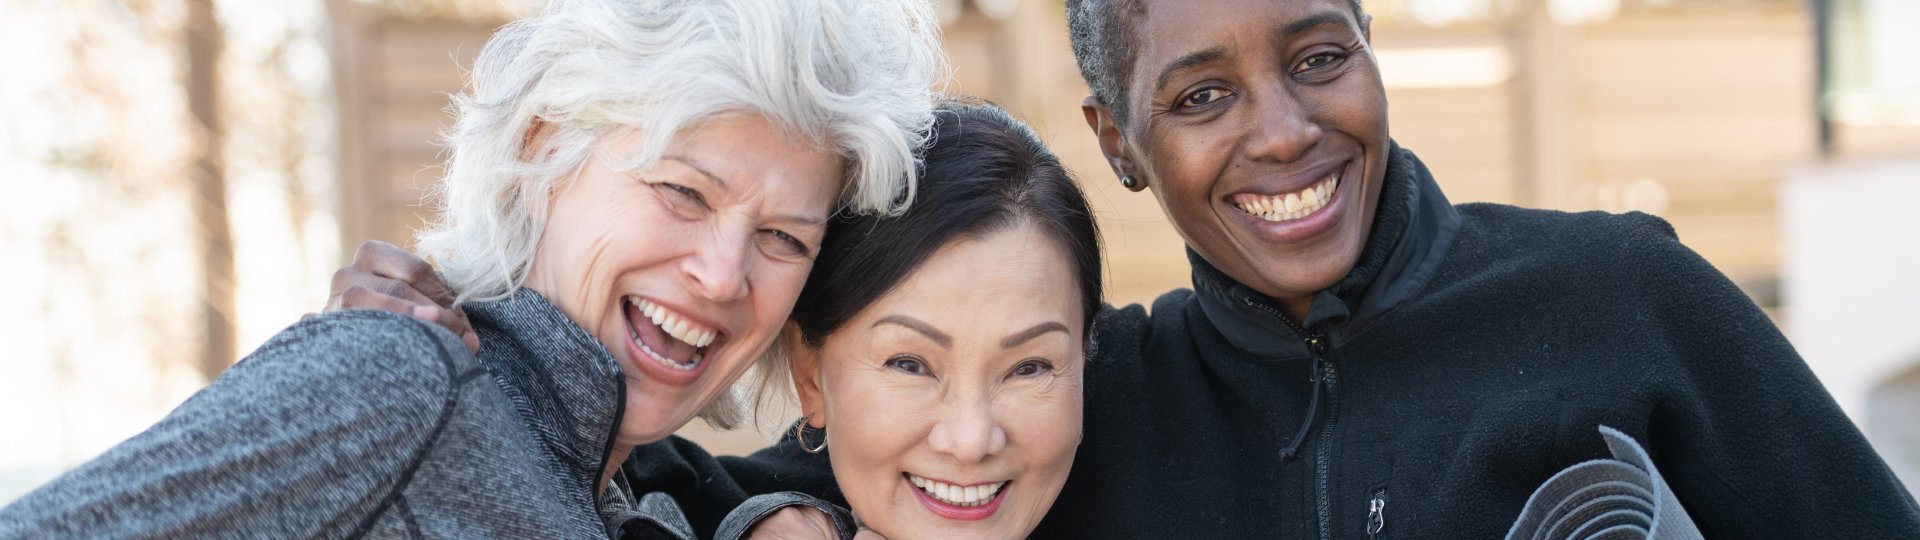 three older people smiling